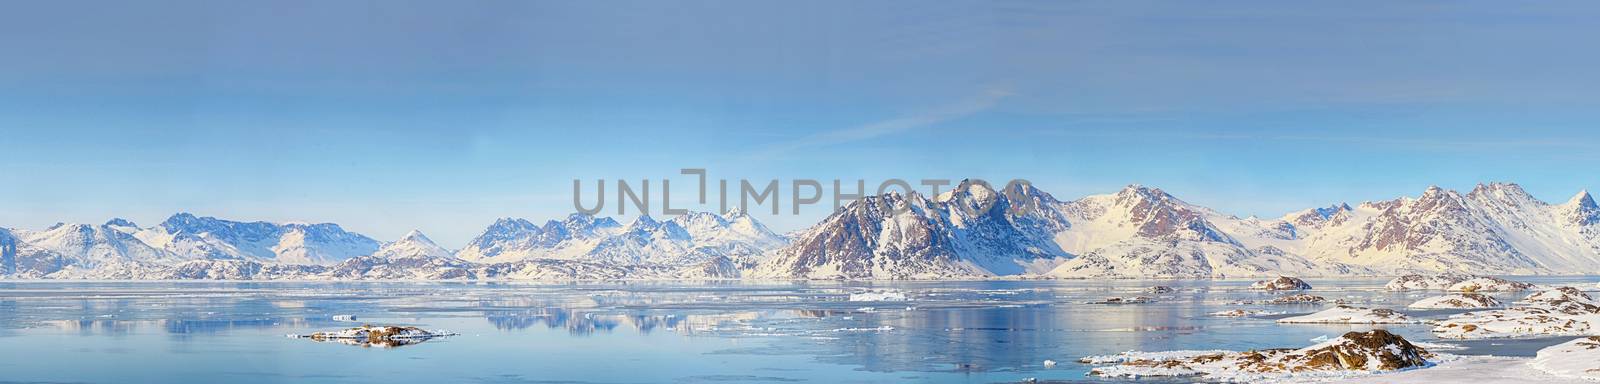 Greenland panorama by mady70